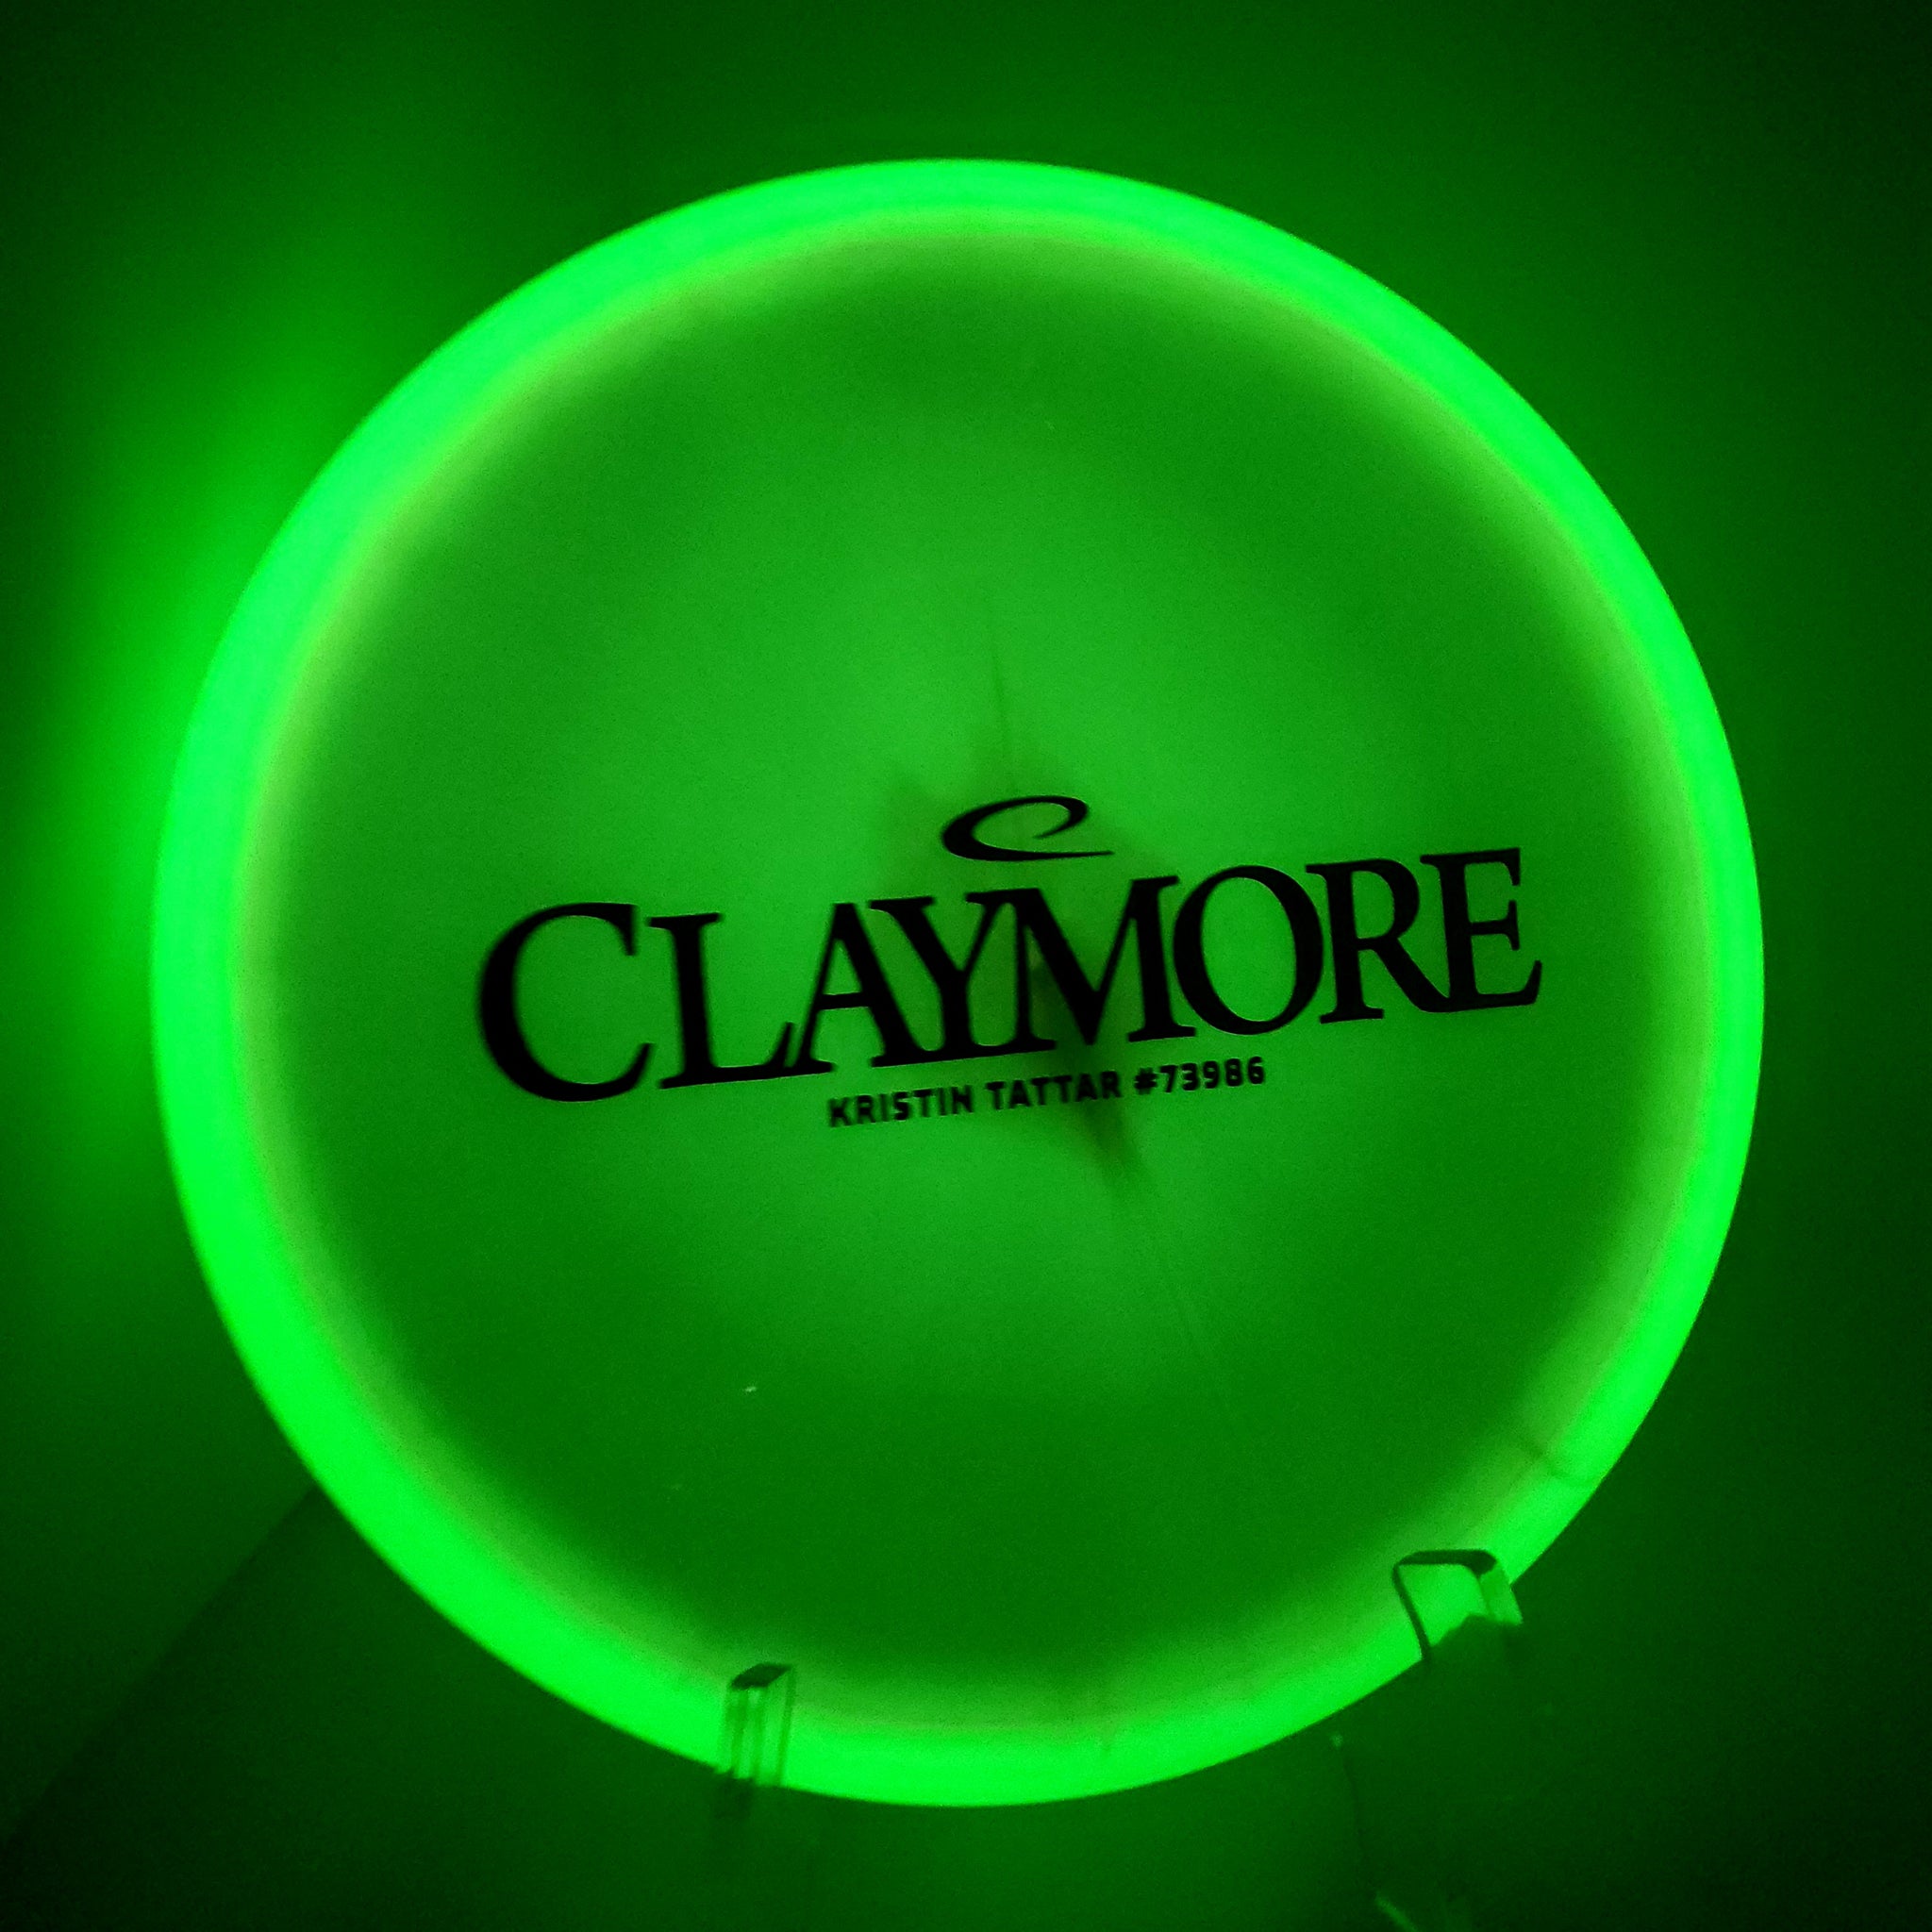 Claymore (Opto Moonshine Orbit) Kristin Tattar #73986